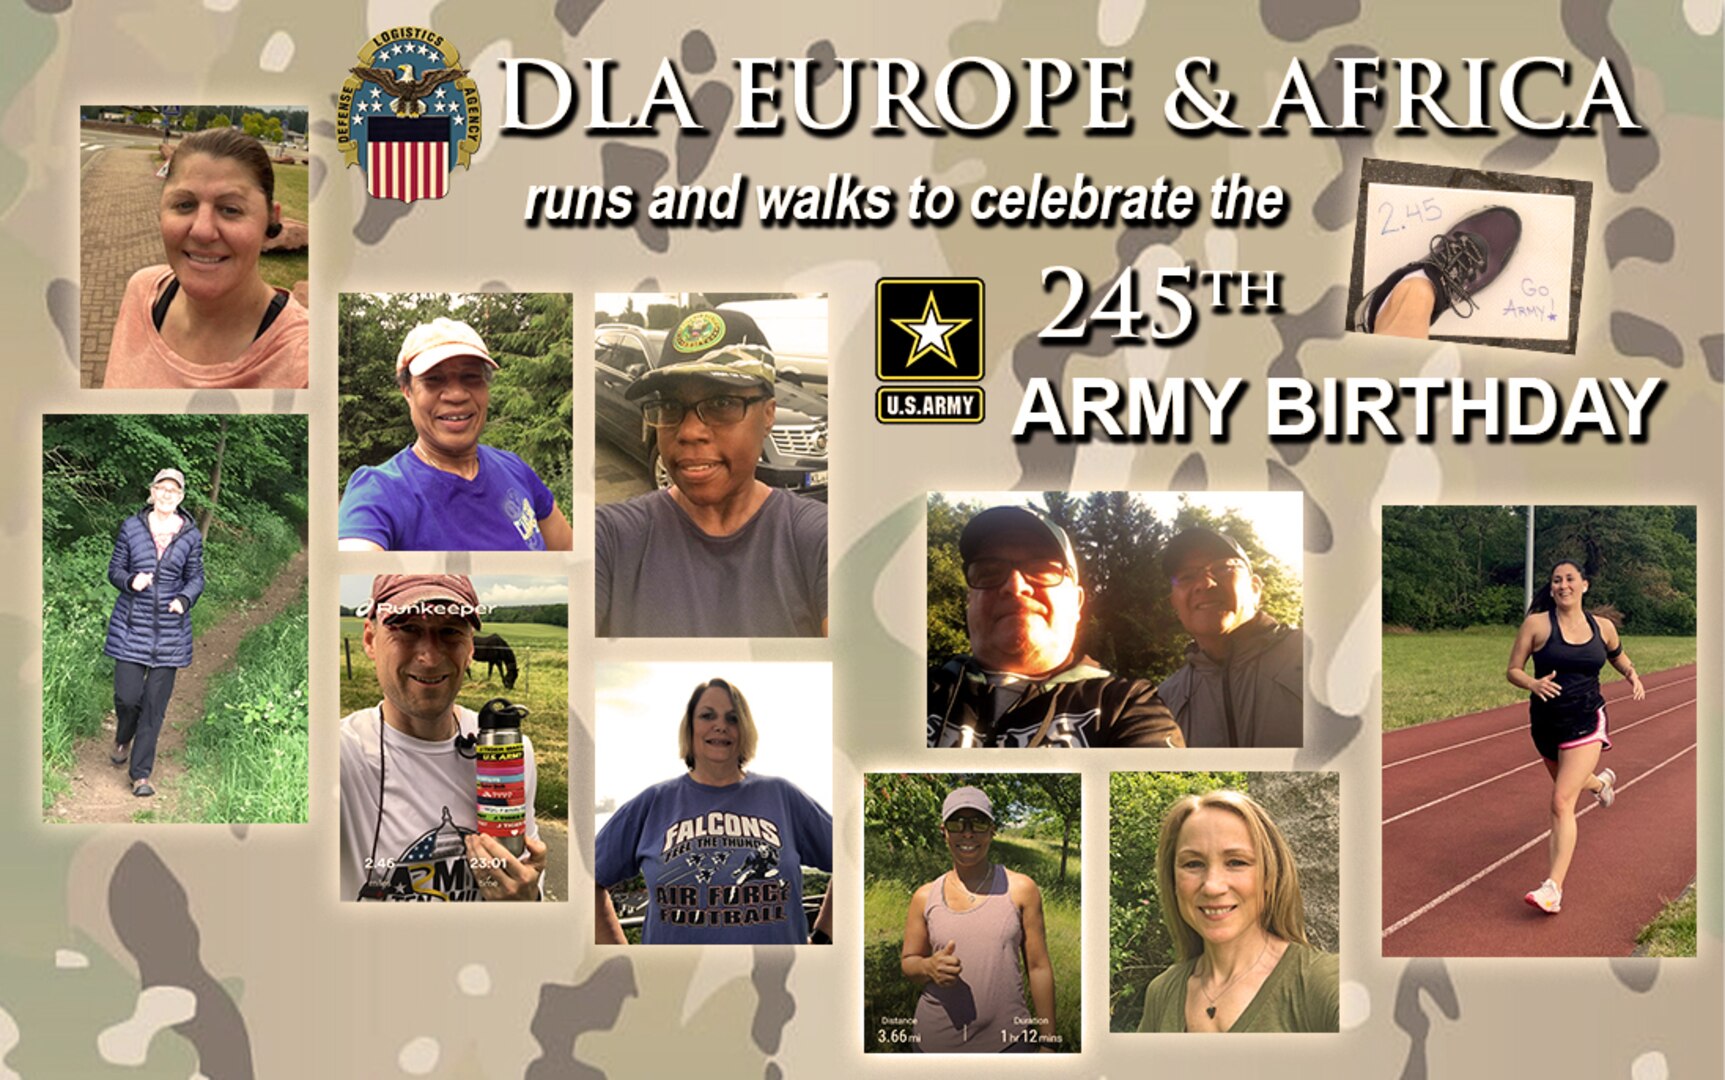 DLA Europe & Africa runs for Army's 245th birthday